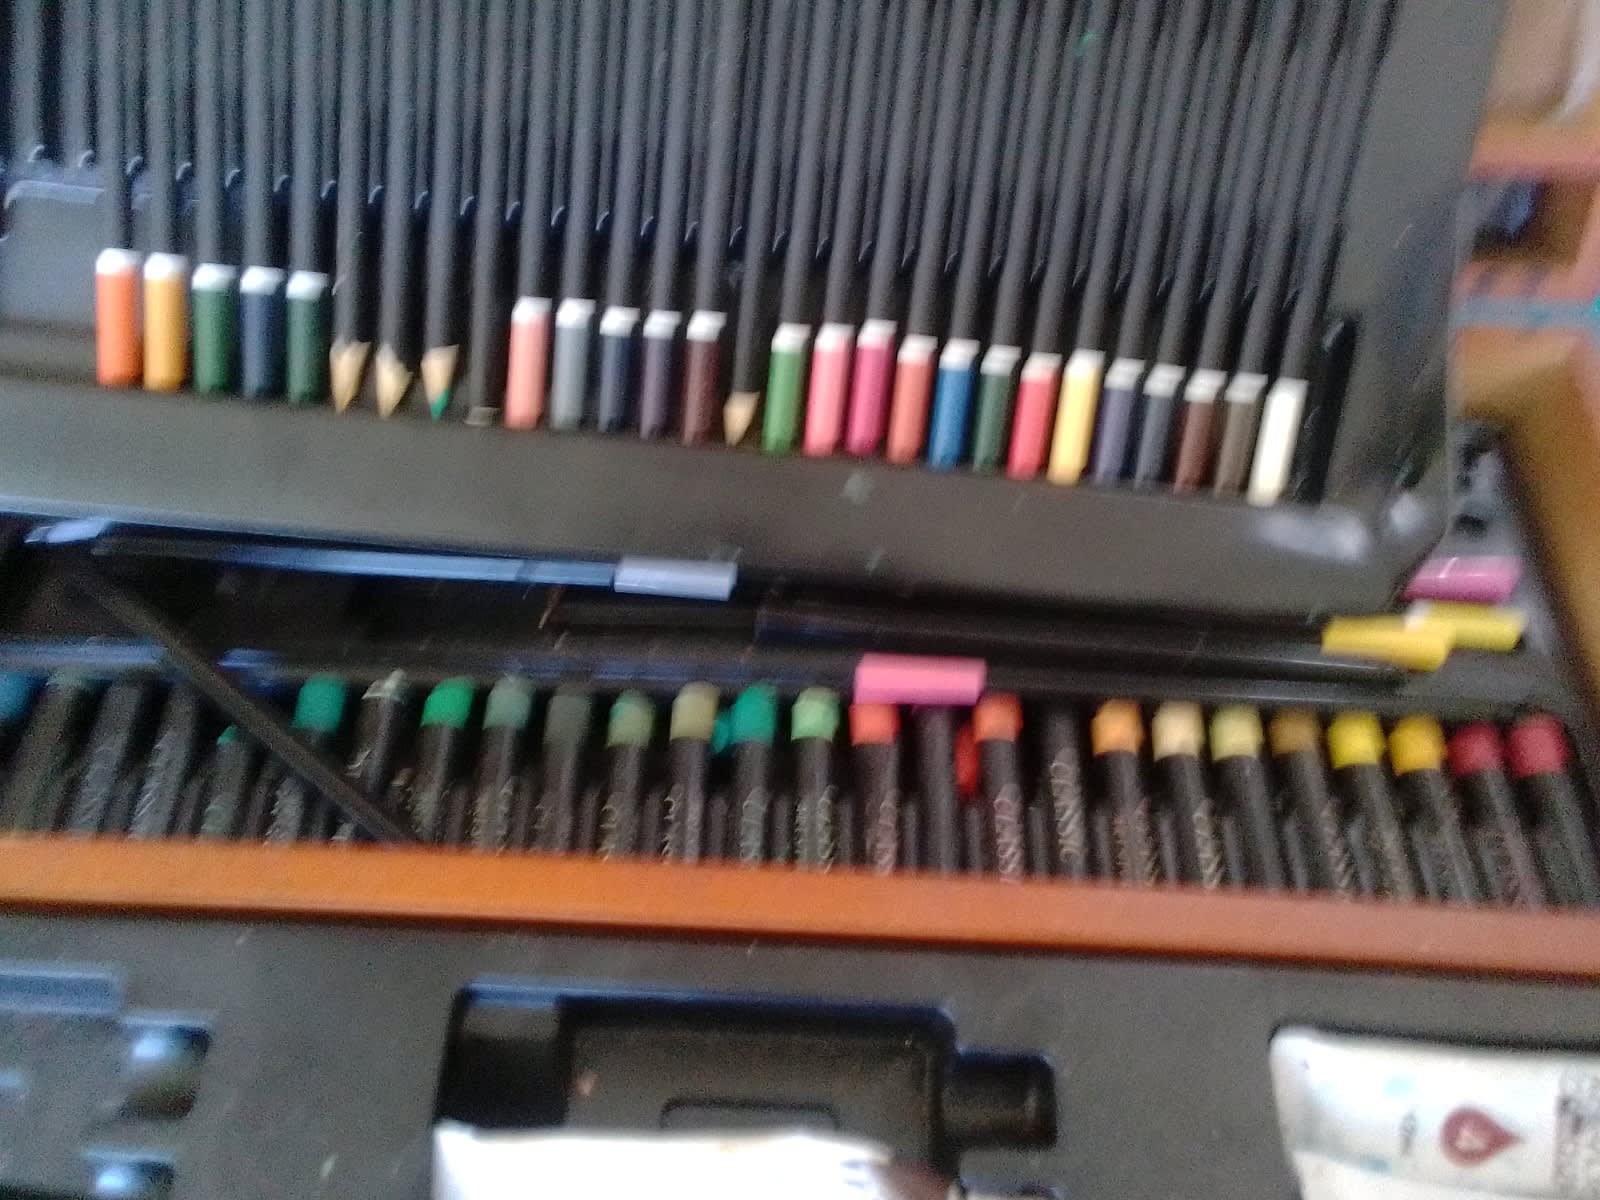 Crayola® So Big™ Crayons, Extra Large, Assorted Colors, Box Of 8 Crayons